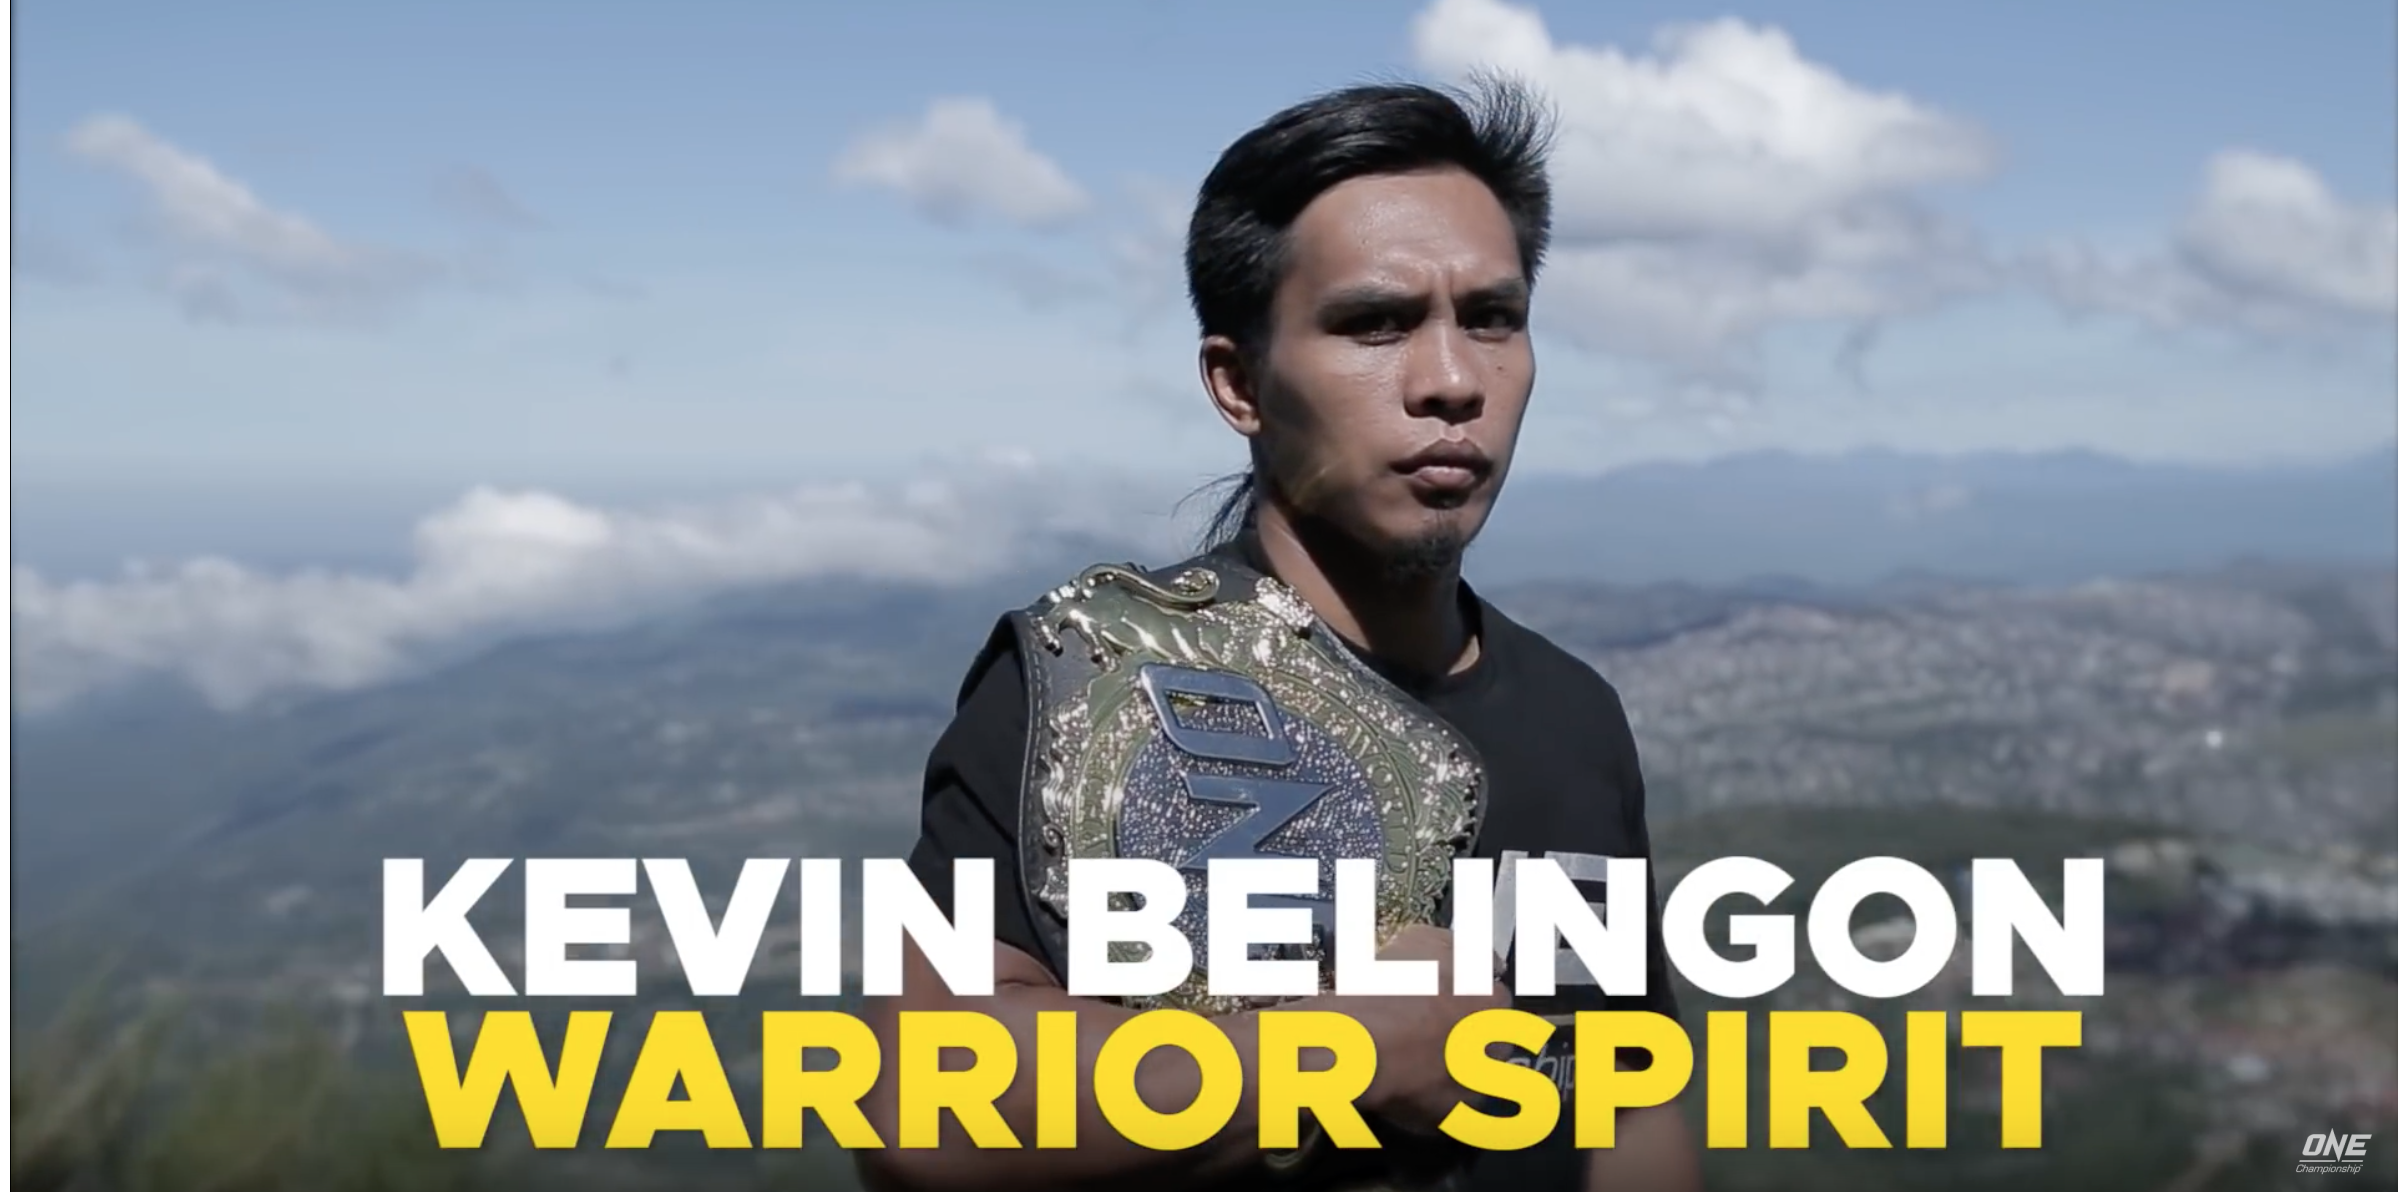 Kevin Belingon’s Warrior Spirit